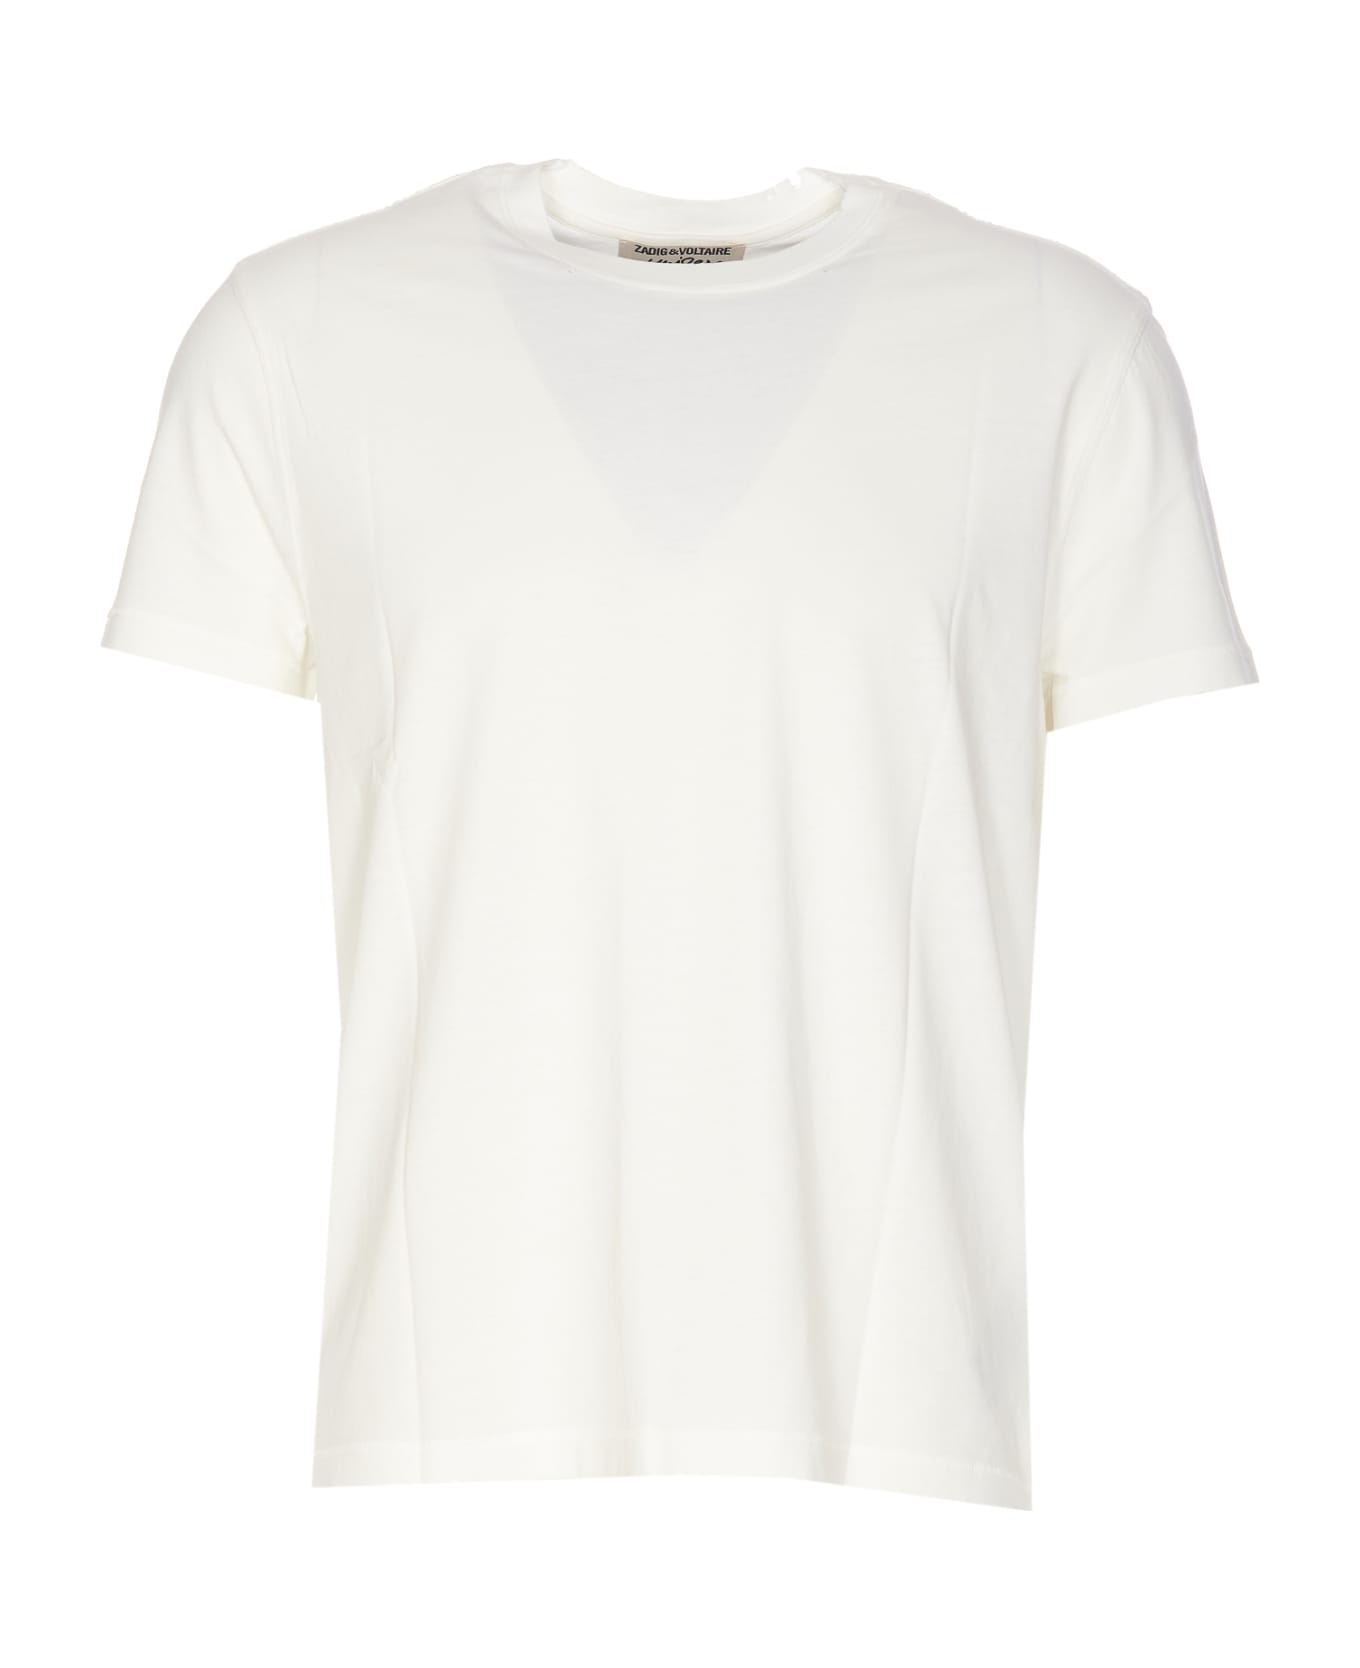 Zadig & Voltaire Jimmy Destroy T-shirt - White